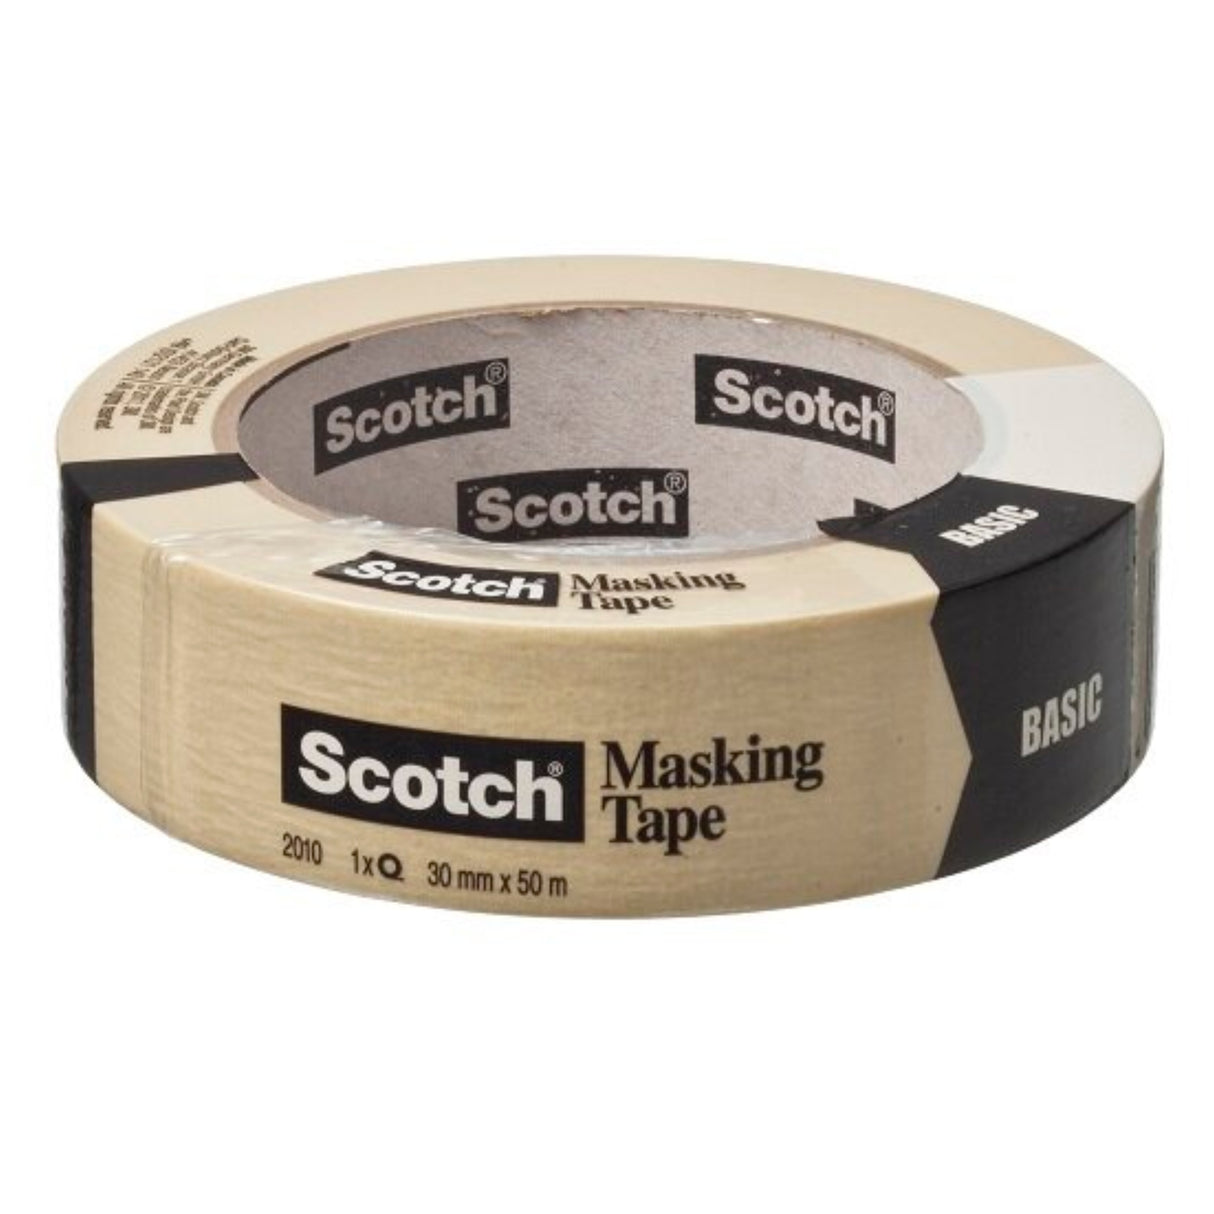 Scotch Masking Tape 2010 Basic 36mm x 50m - PROTEUS MARINE STORE